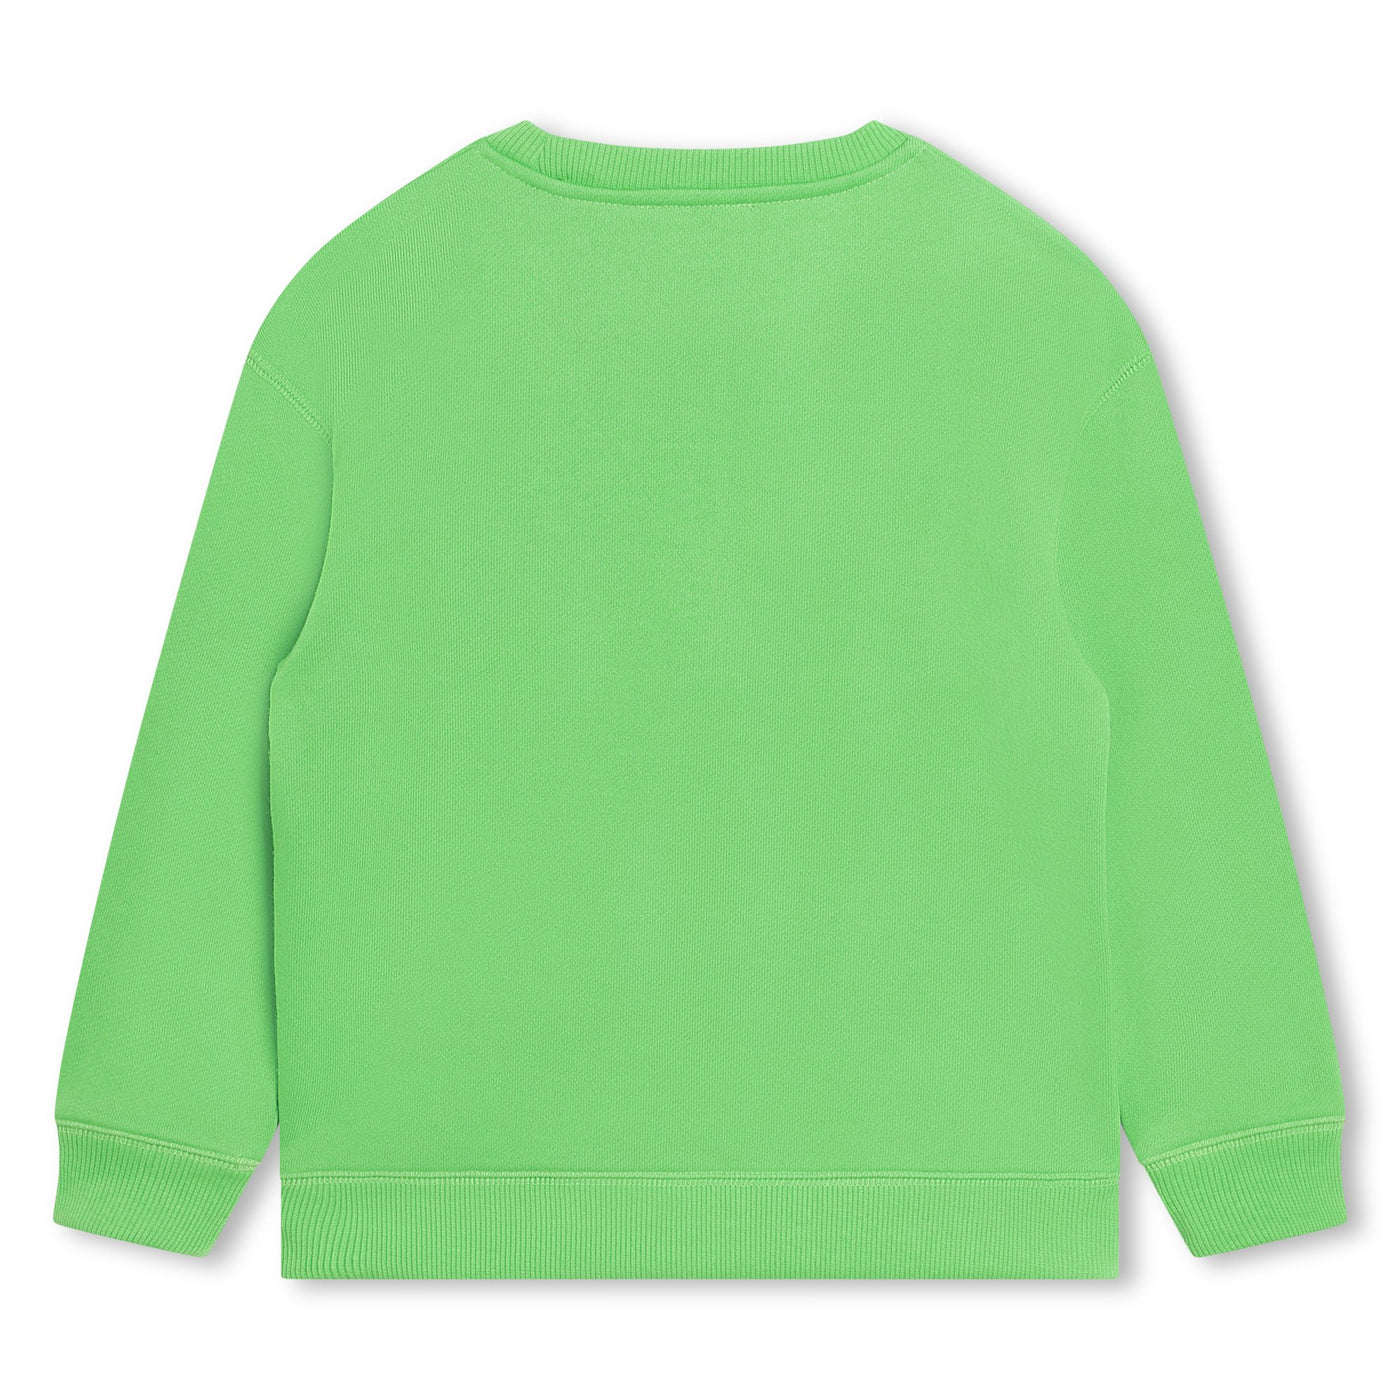 Green Sweatshirt by Marc Jacobs